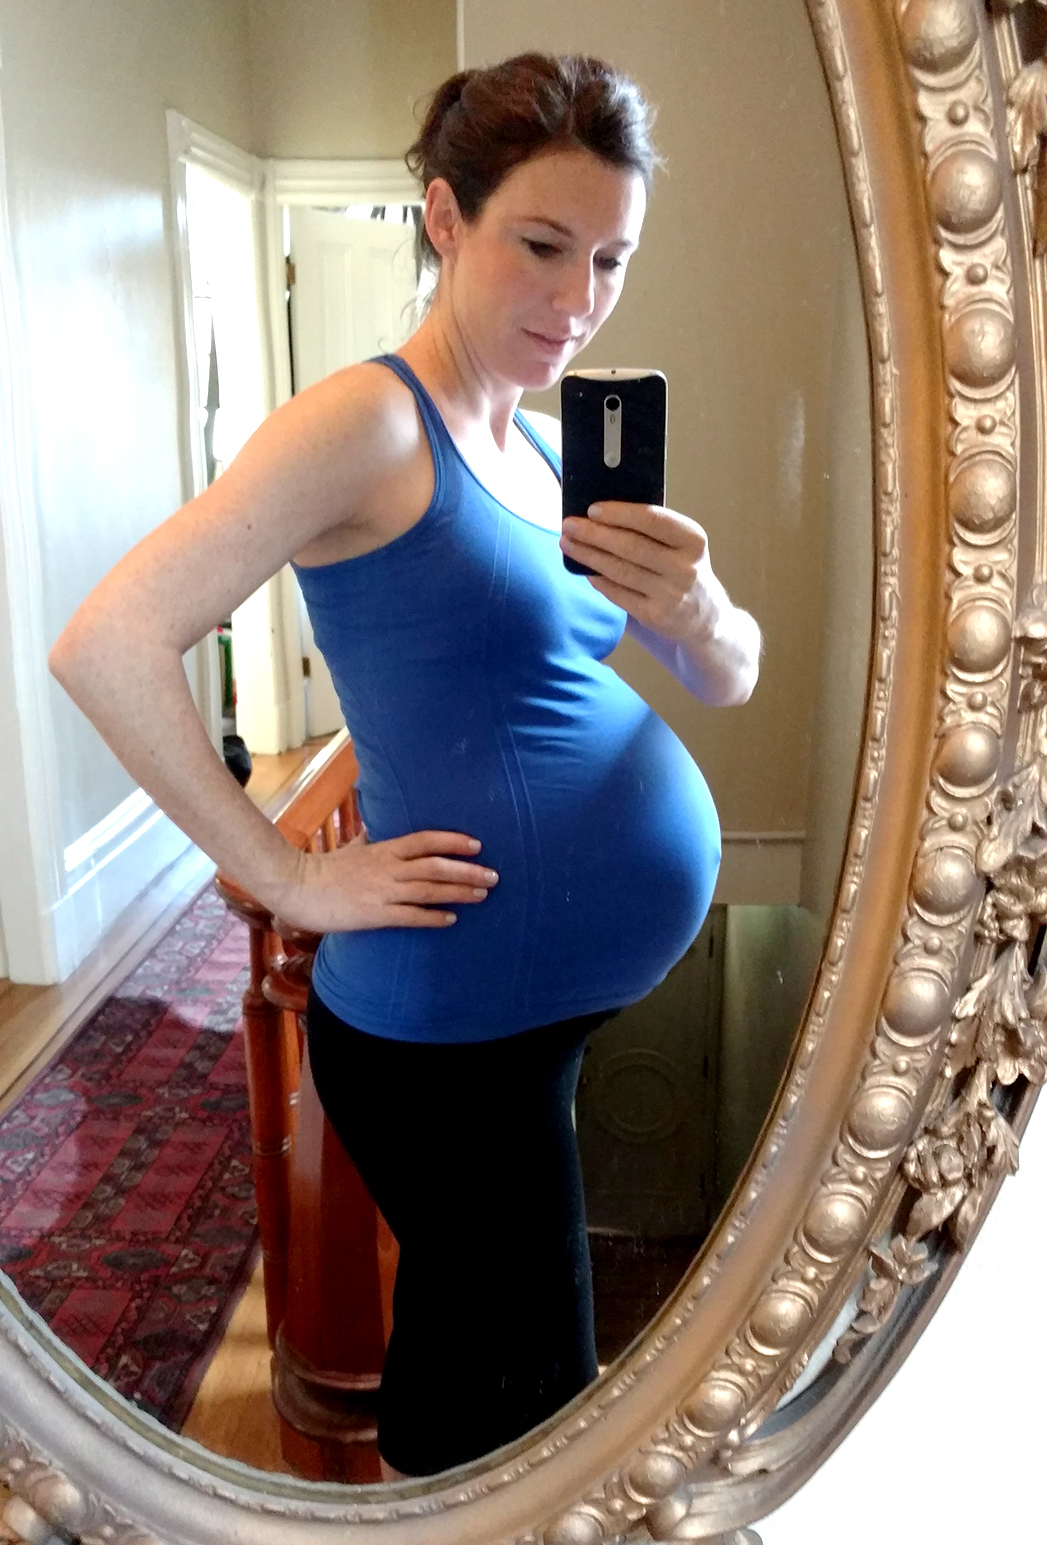 Biking 9 months pregnant